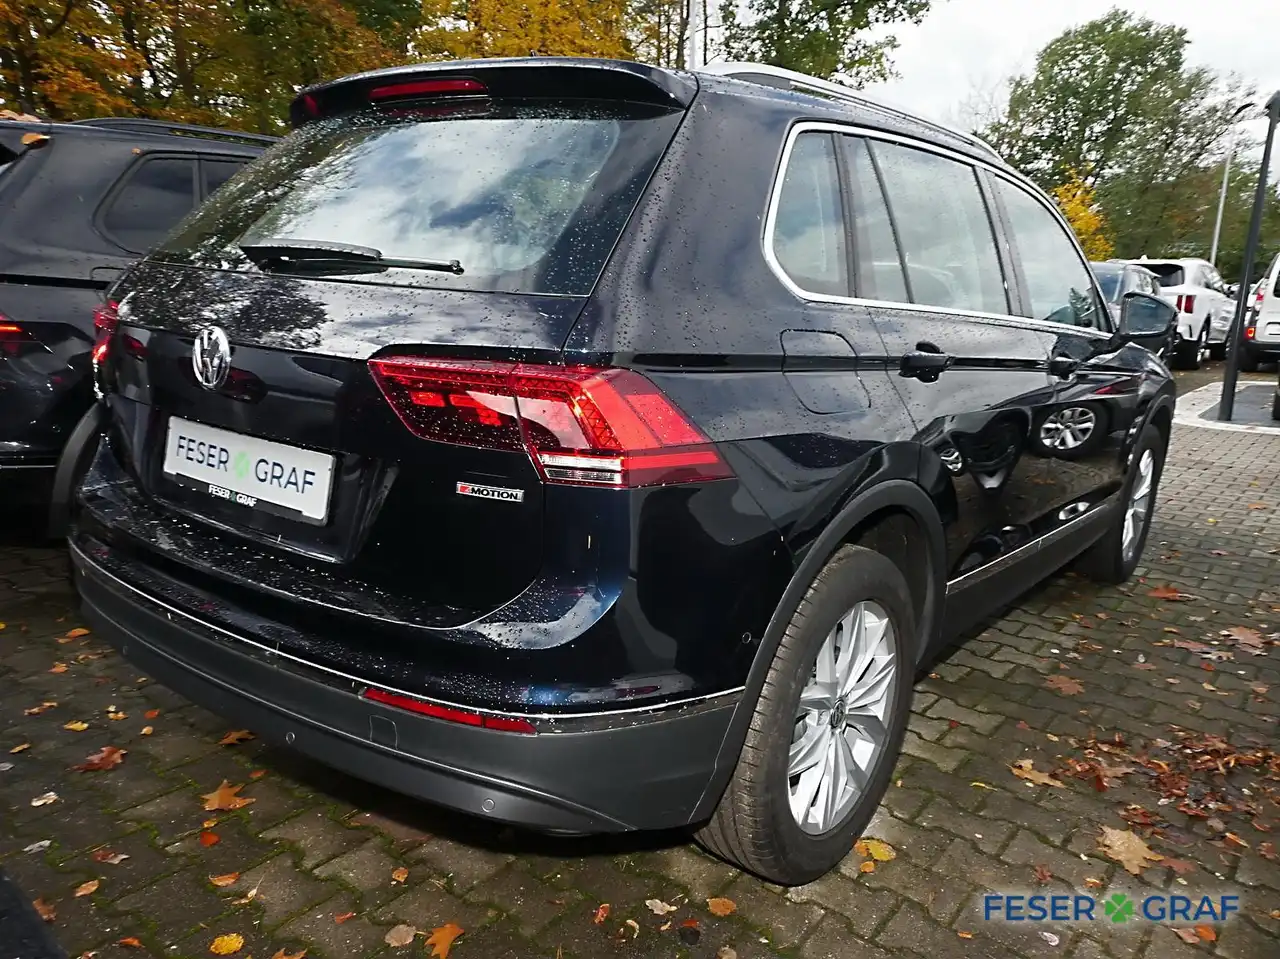 VW TIGUAN Gebraucht, Benzin, Automatik, FzN: 9163 🍀 Feser-Graf  Fahrzeugsuche